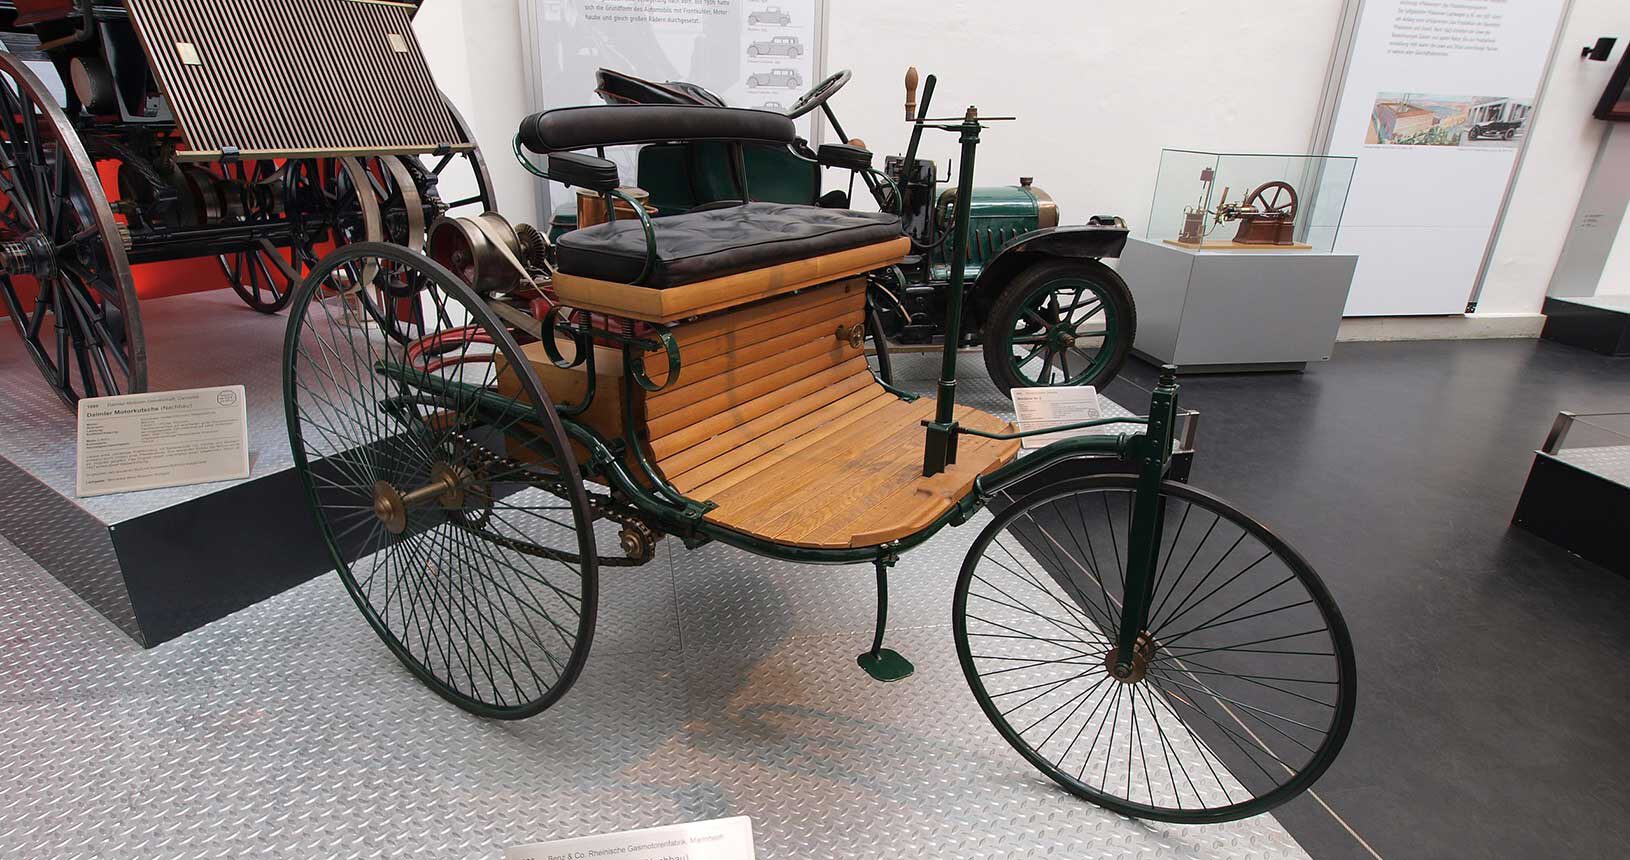 Benz Patent-Motorwagen (1886), Nachbau, Foto: Alf van Beem - Public Domain